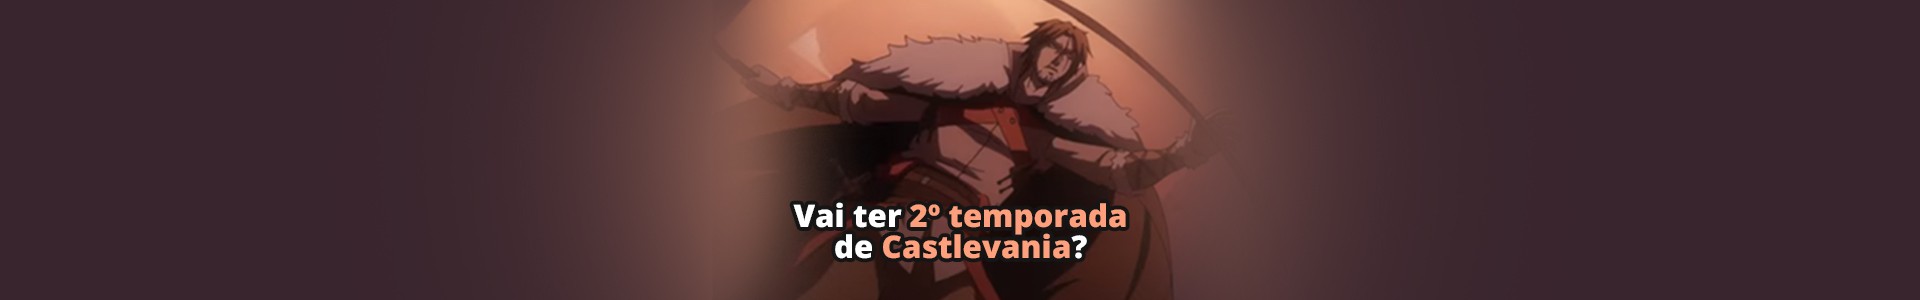 Castlevania: Vai ter a 2ª temporada na Netflix?